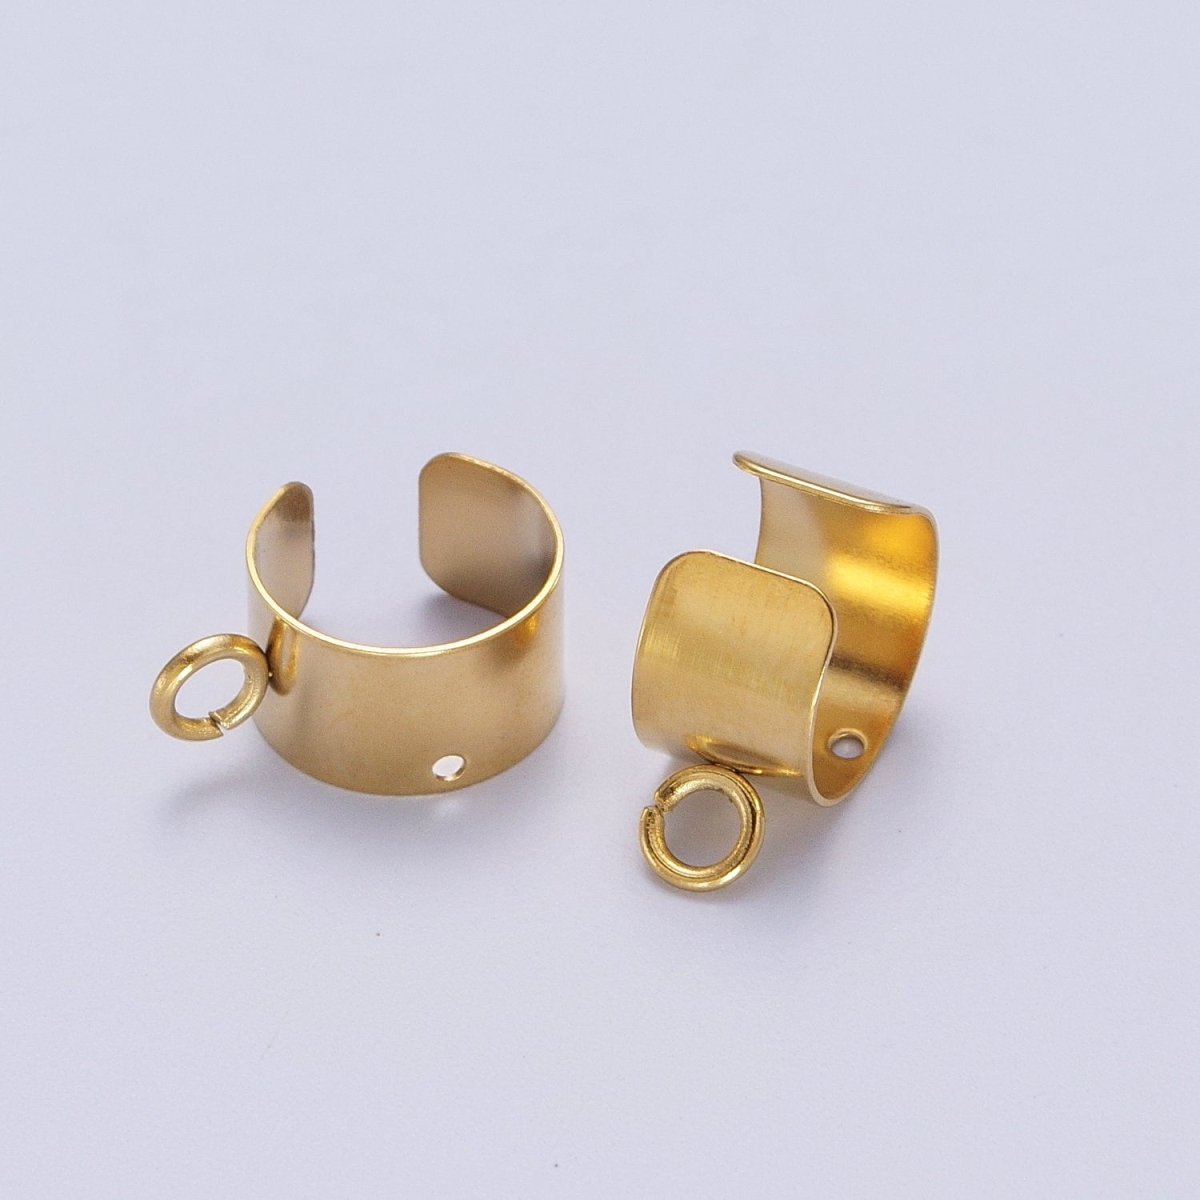 24K Gold Filled Stainless Steel Open Loop Wide Band Ear Cuff Earrings Supply | K-207 - DLUXCA